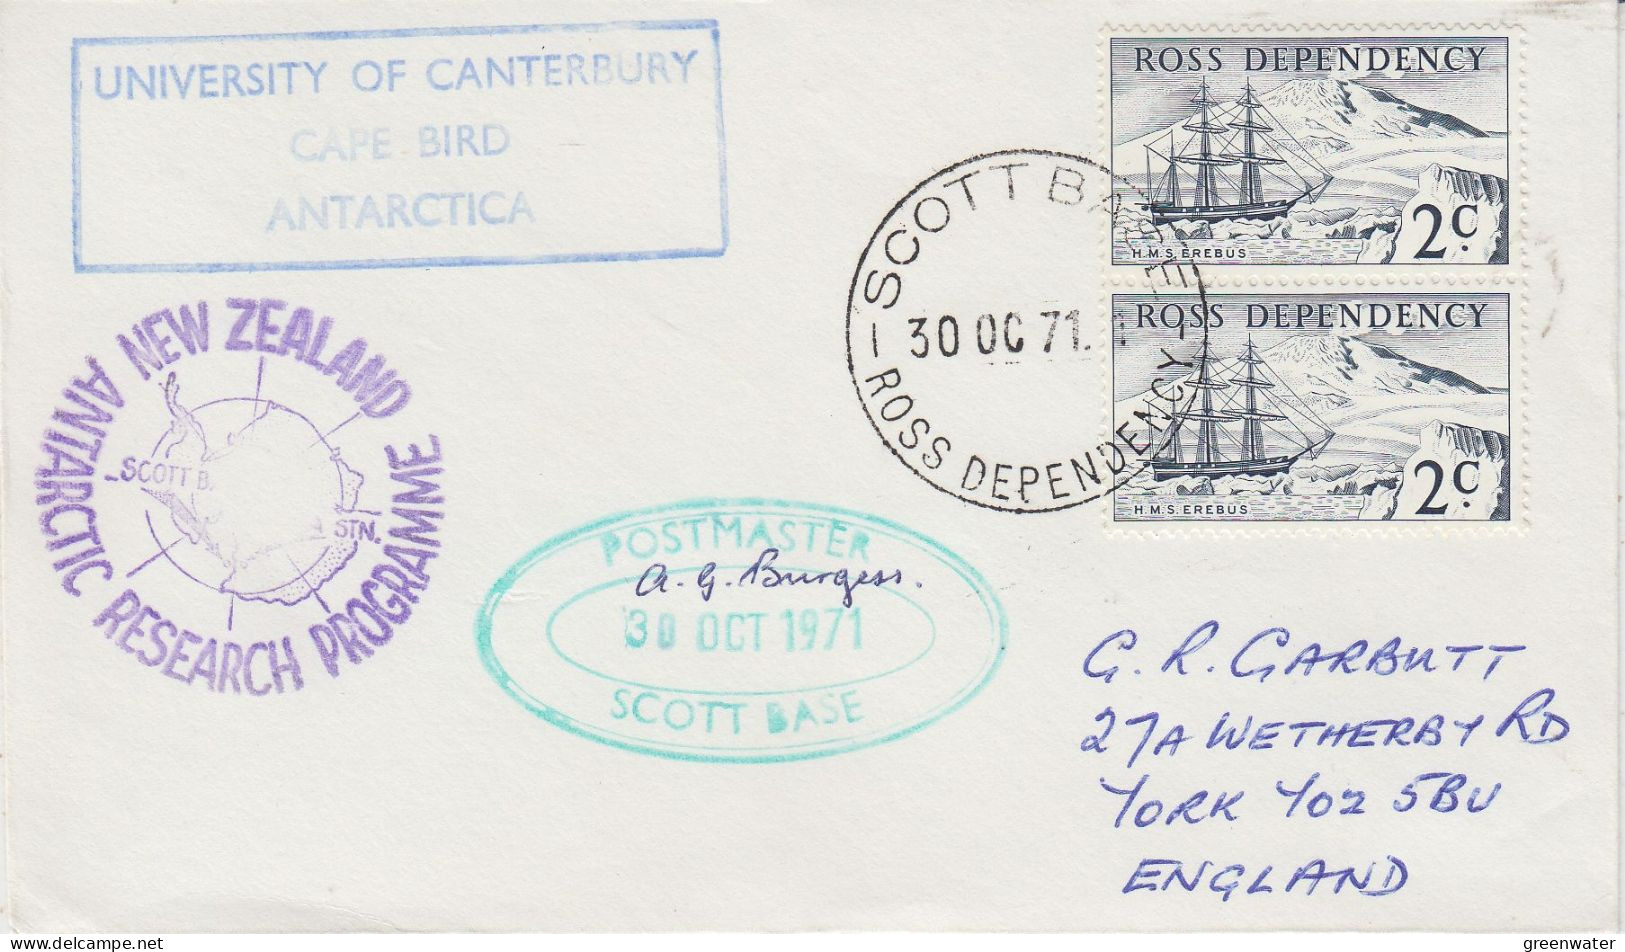 Ross Dependency University Of Canterbury Cape Bird  Signature Postmaster Scott Base  Ca Scott Base 30 OCT 1971 (SO192) - Research Stations